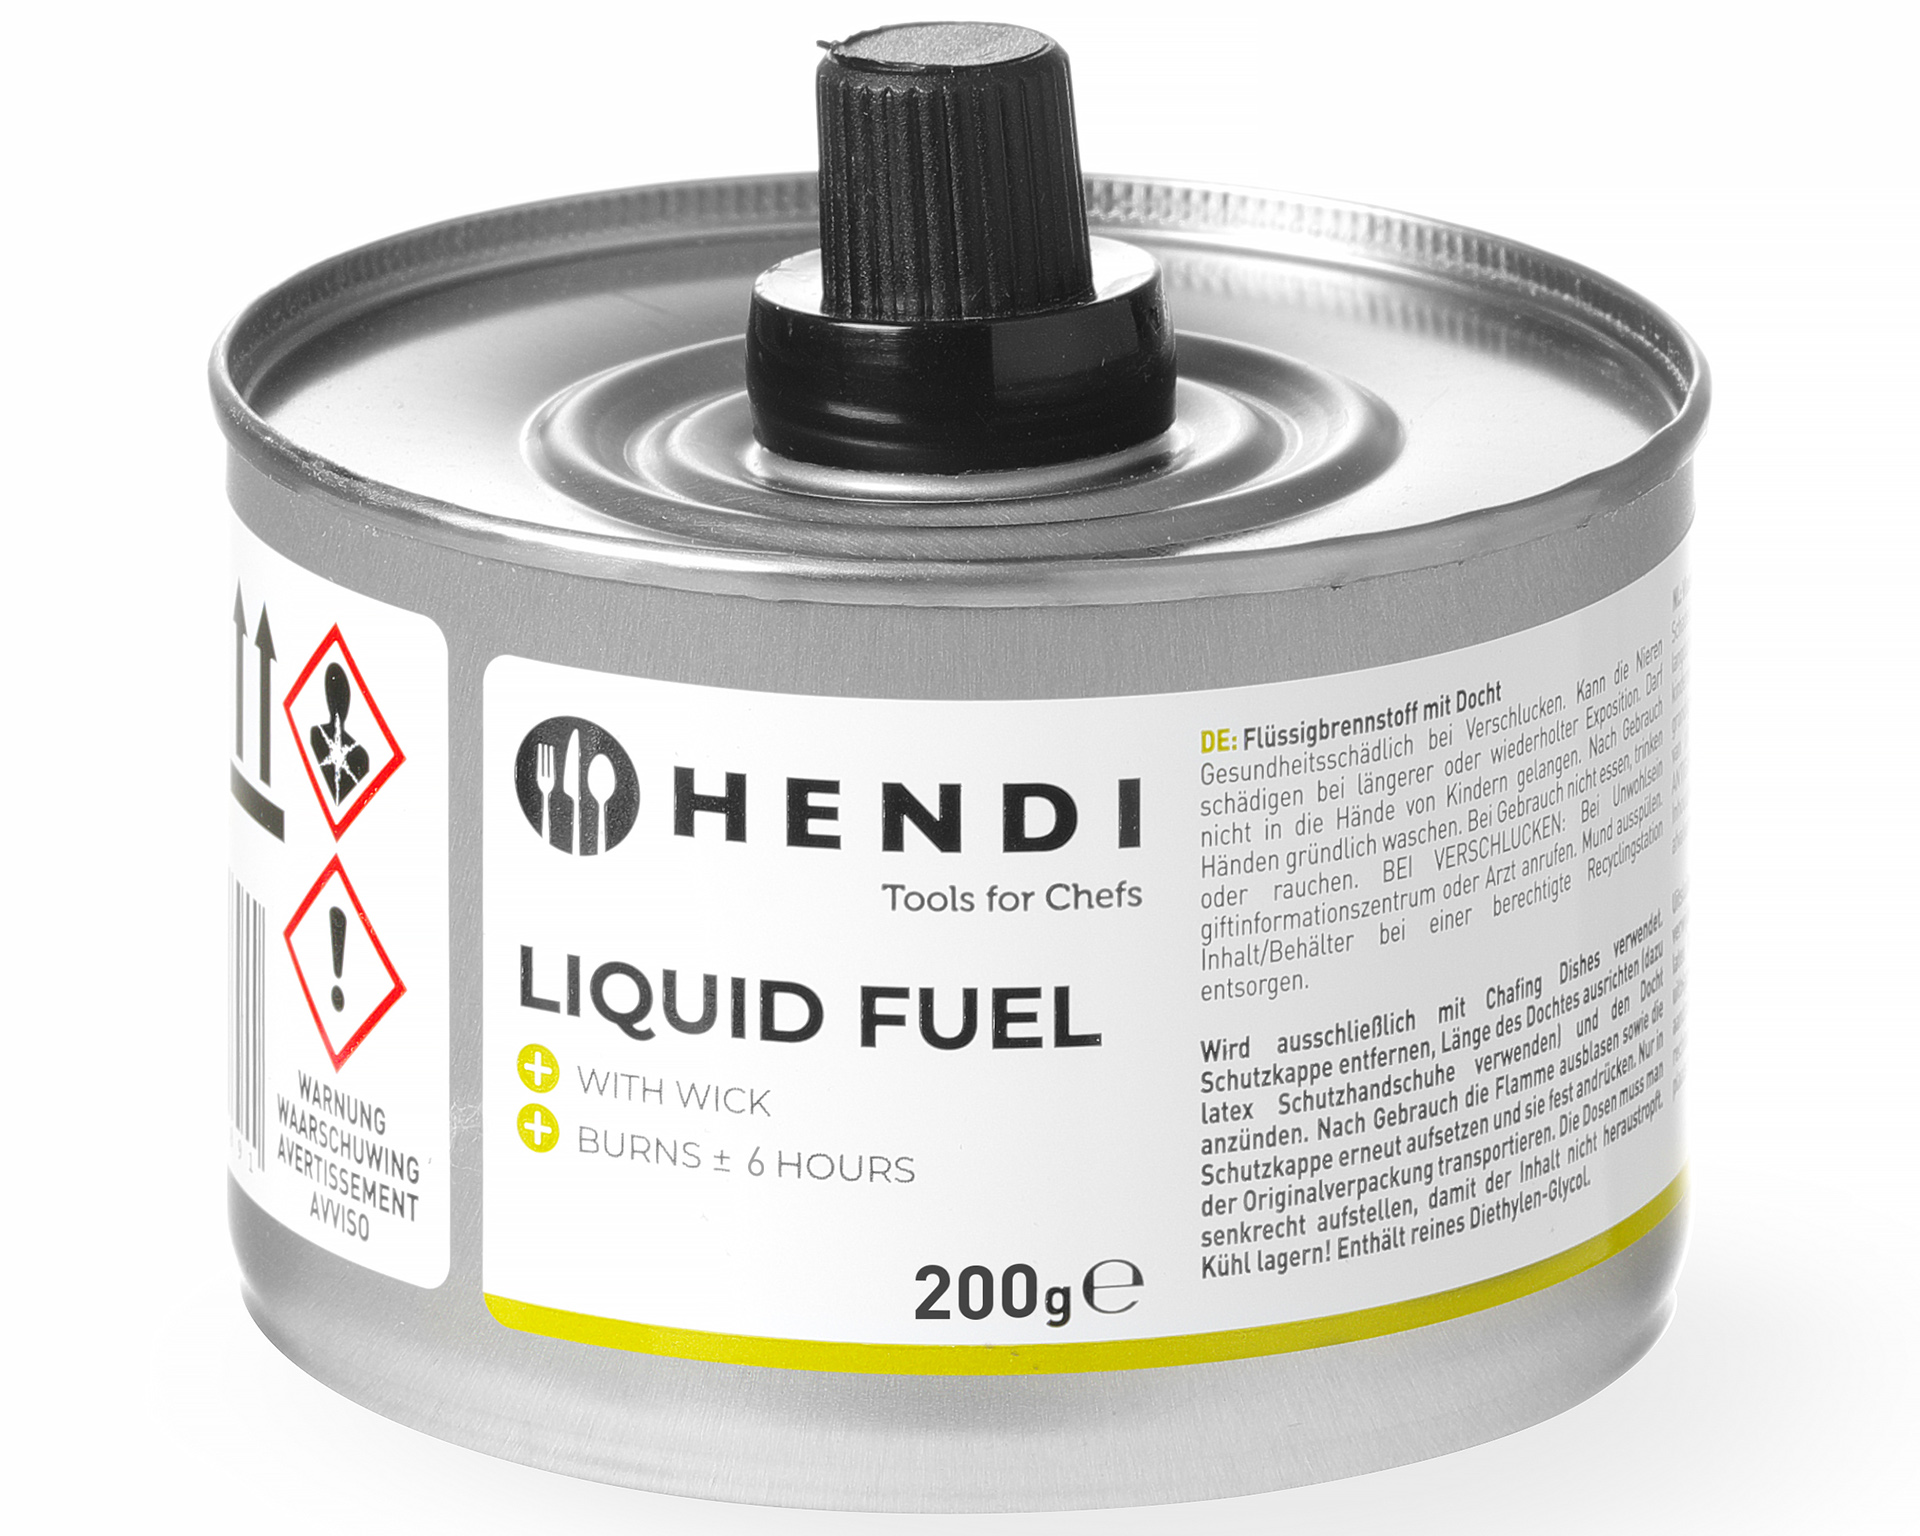 Combustible liquide avec mèche HENDI